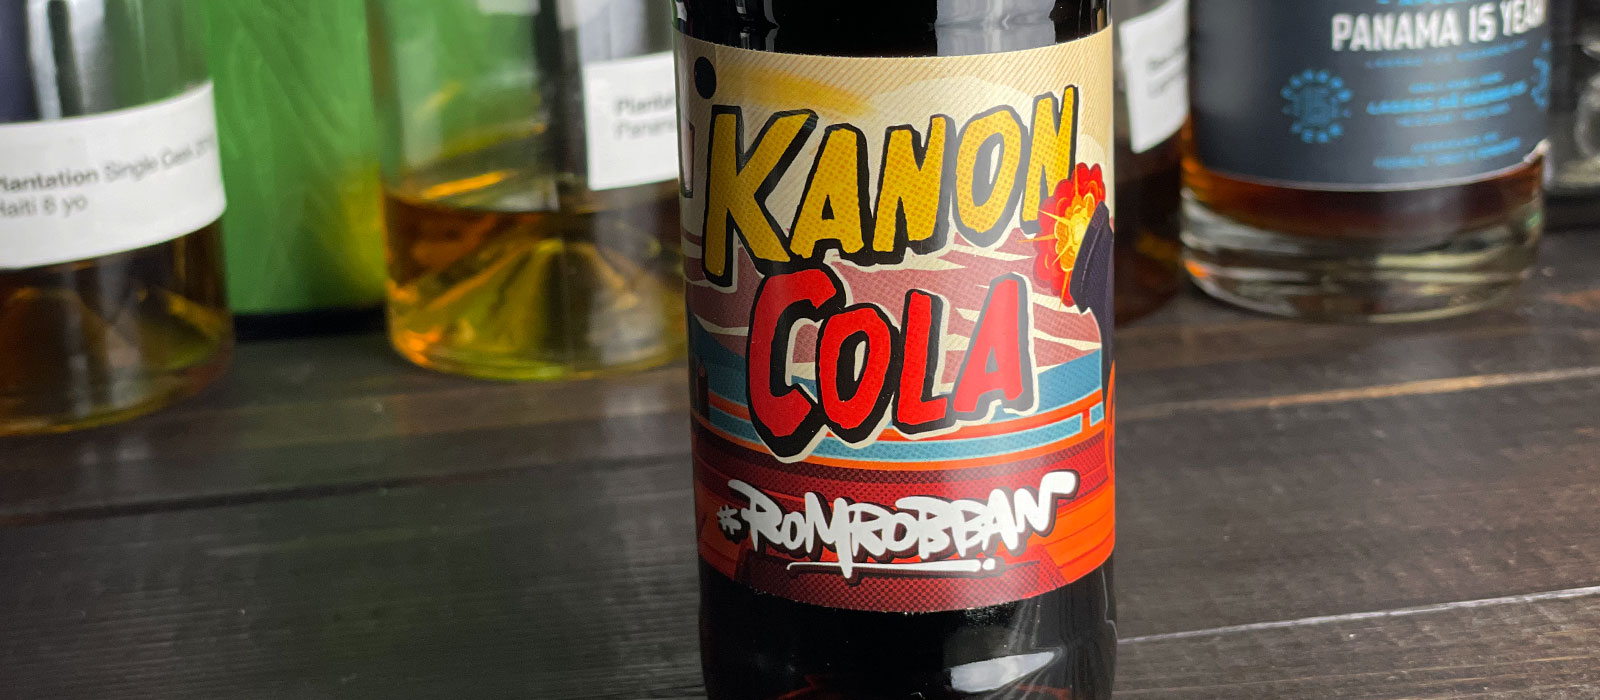 Kanon Cola – RomRobbans egna cola